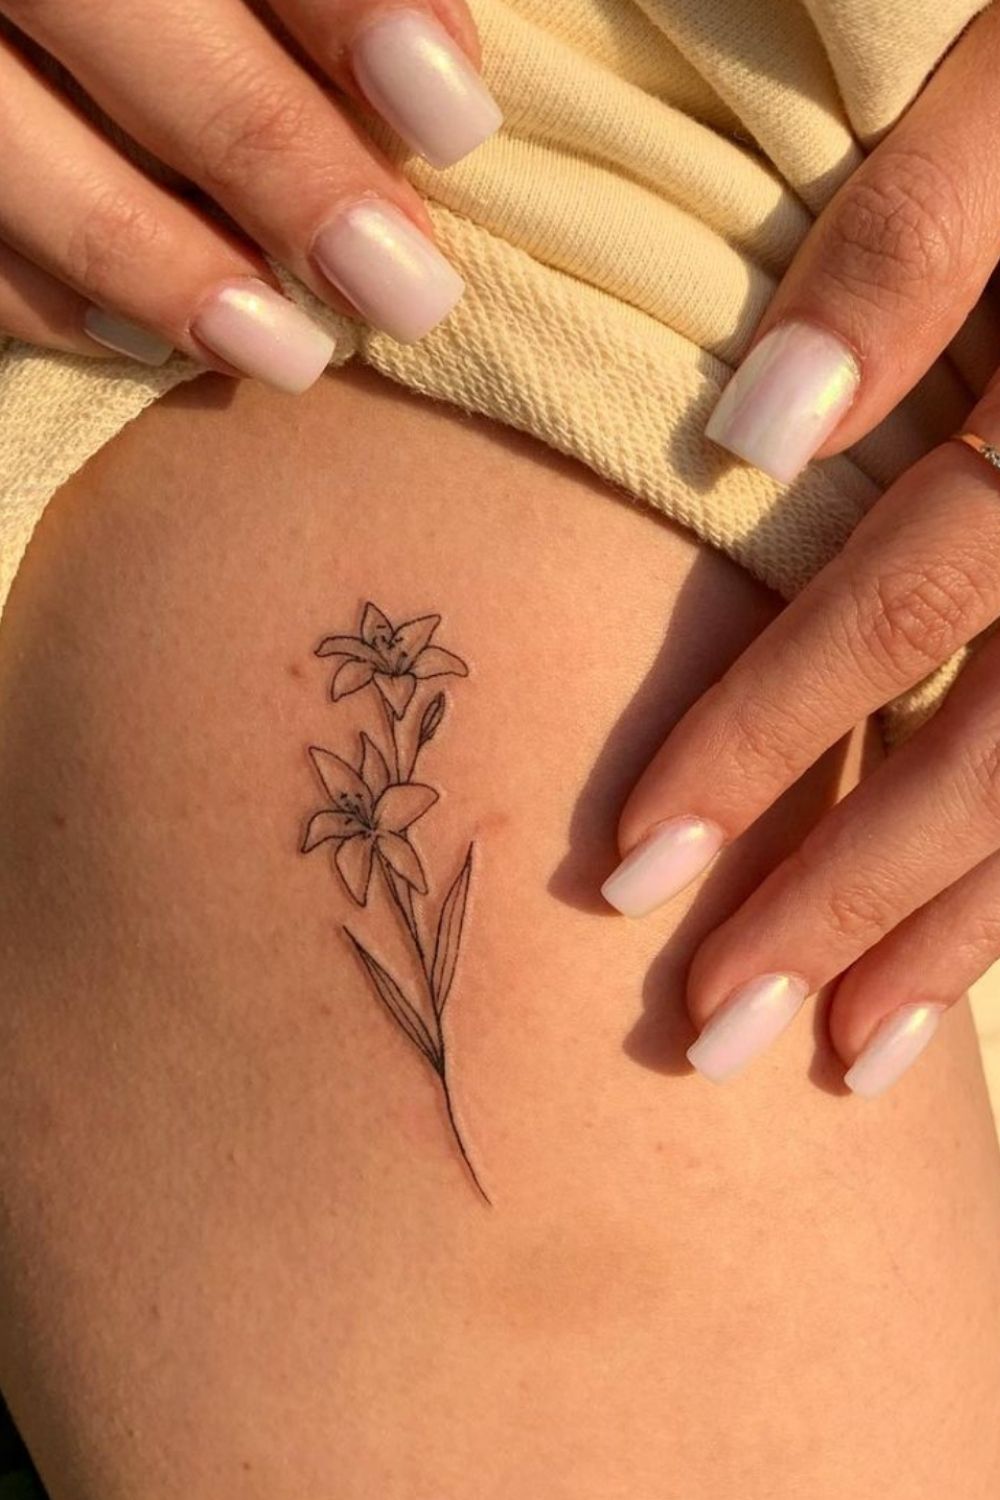 Cute Minimalist Tattoos Design for women with tiny tattoo pattern